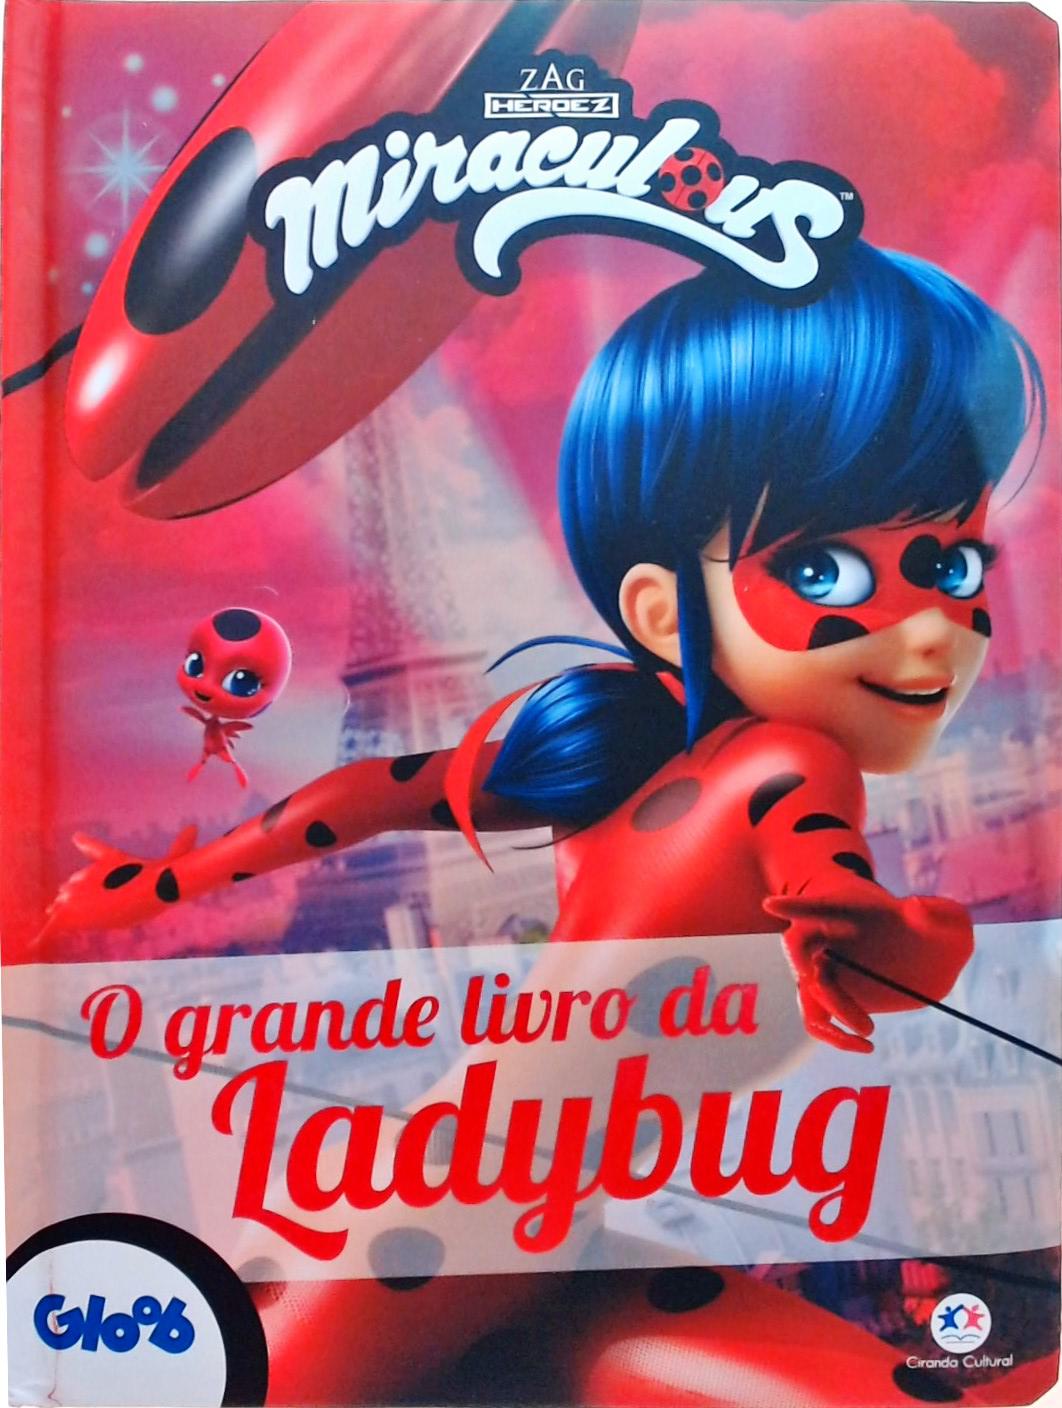 Ladybug - O grande livro da Ladybug